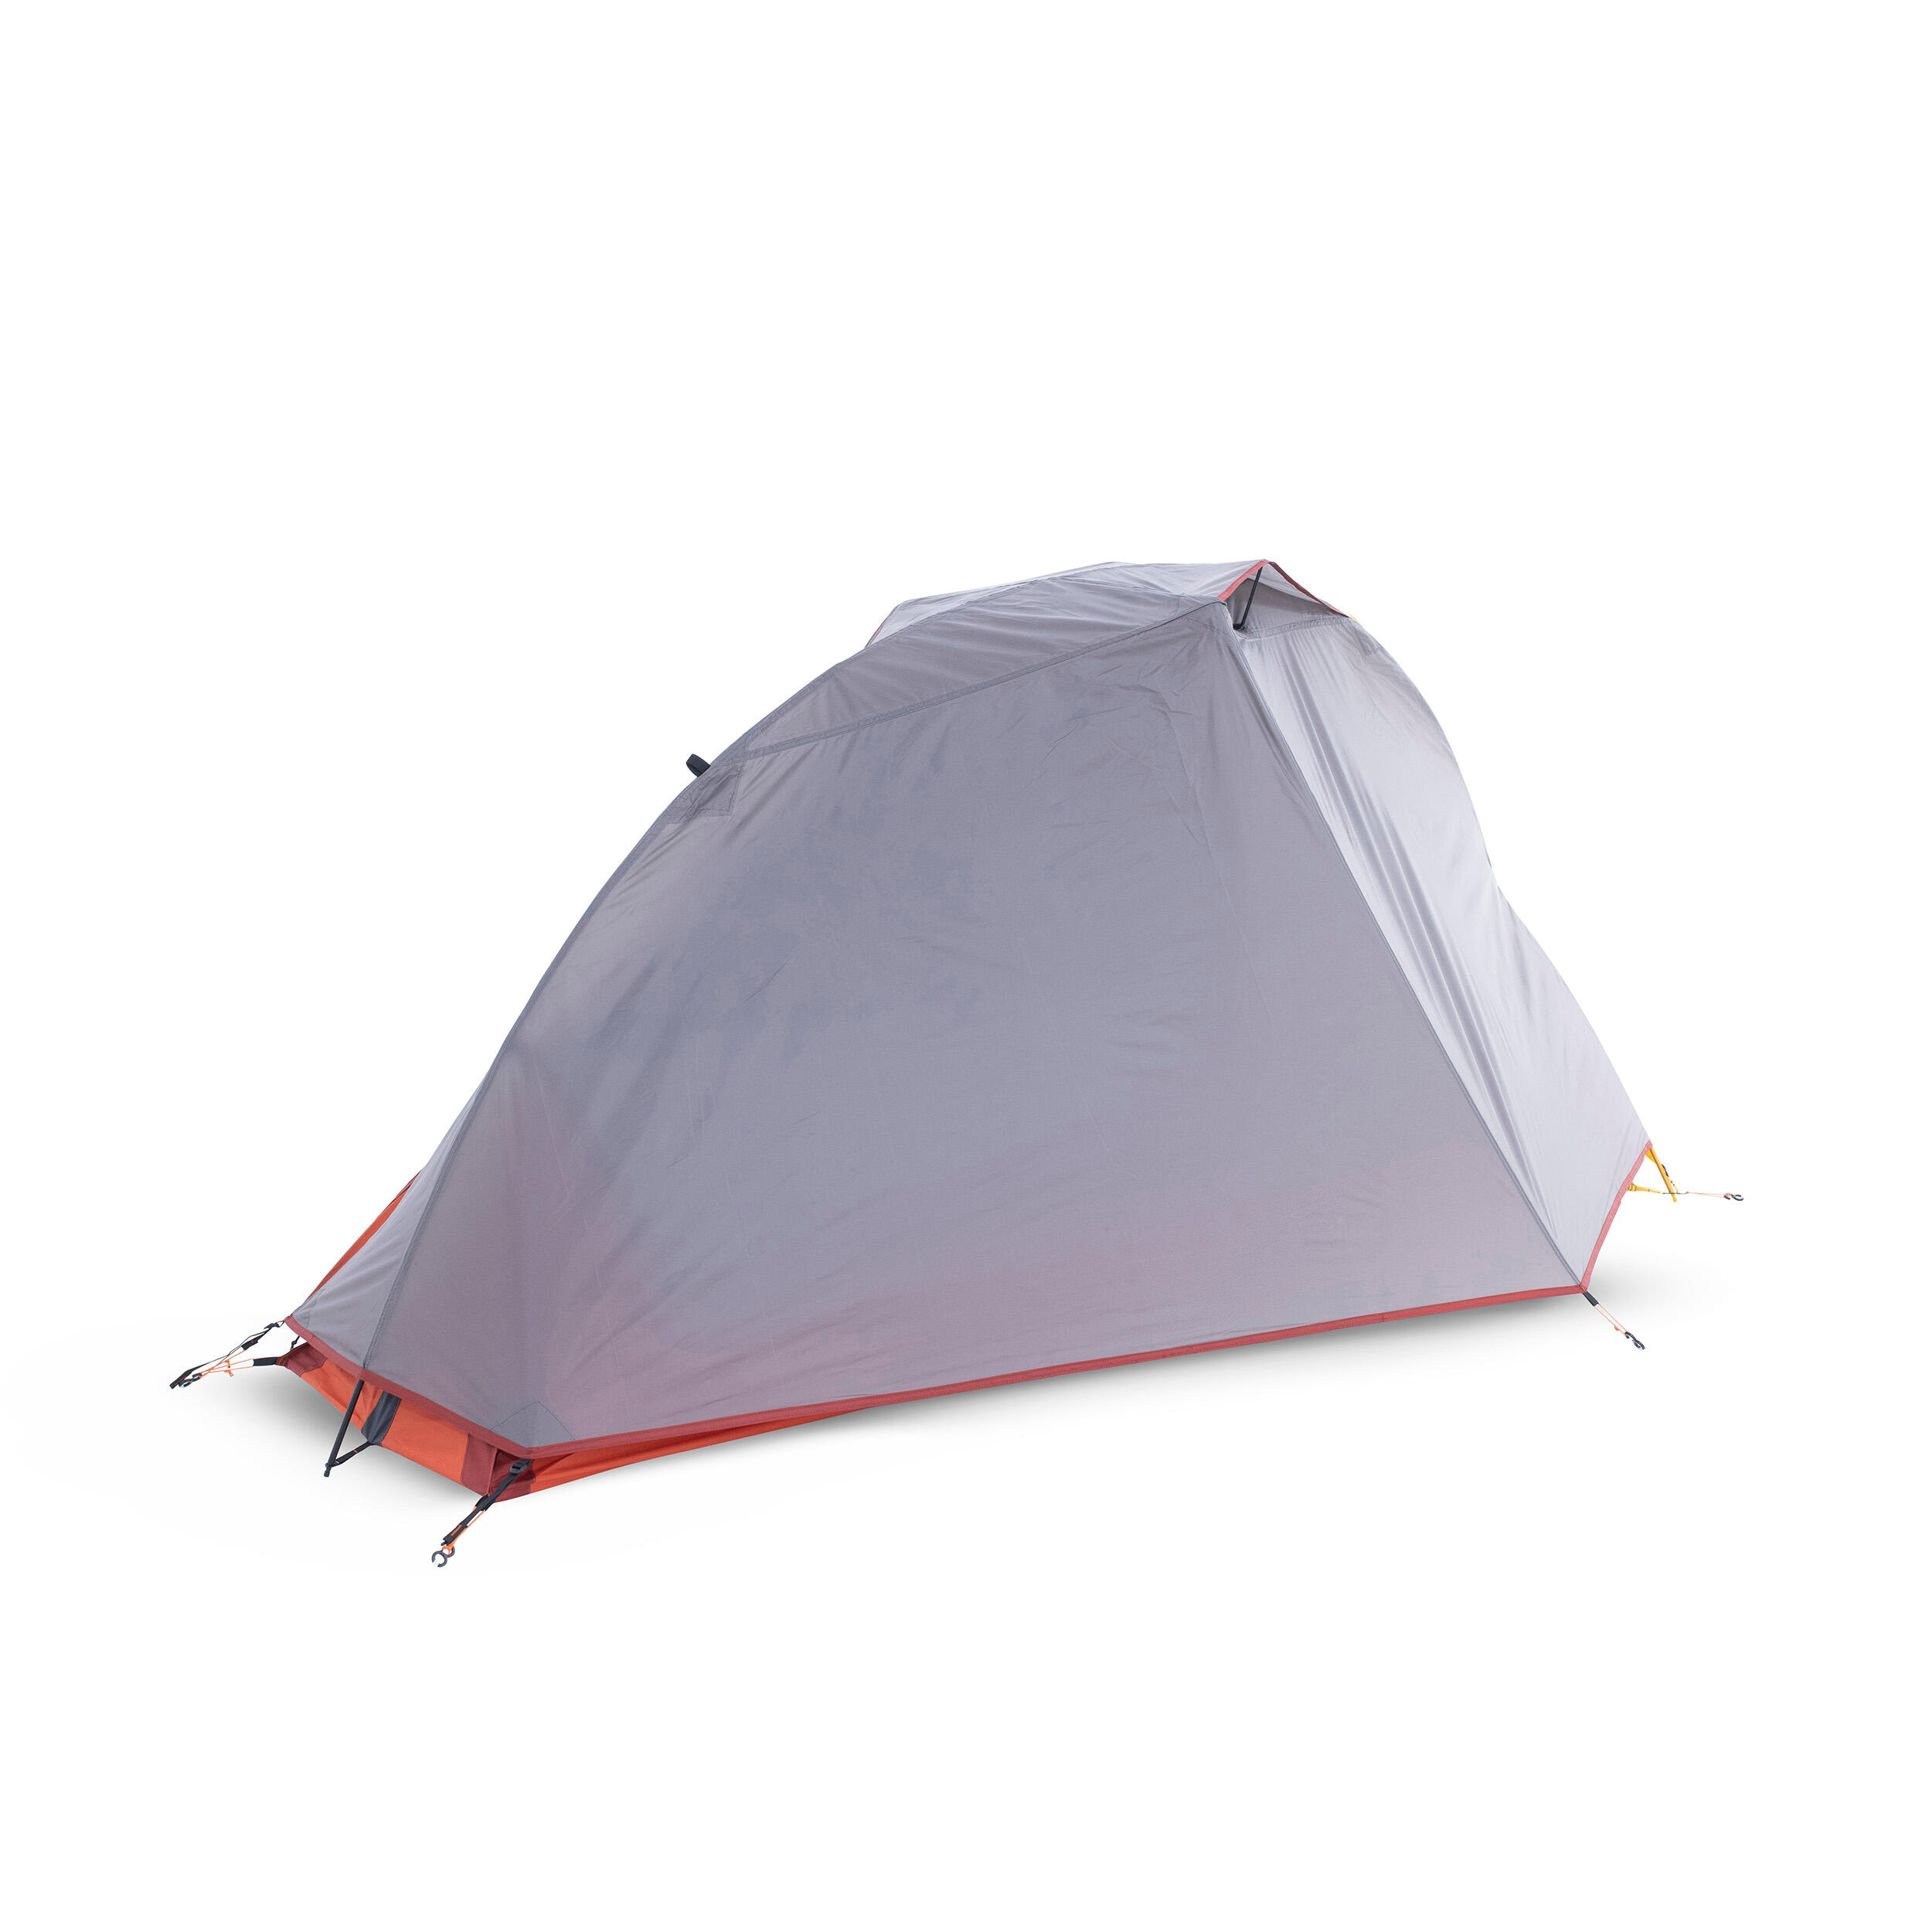 Trekking dome tent - 1-person - MT900 11/14